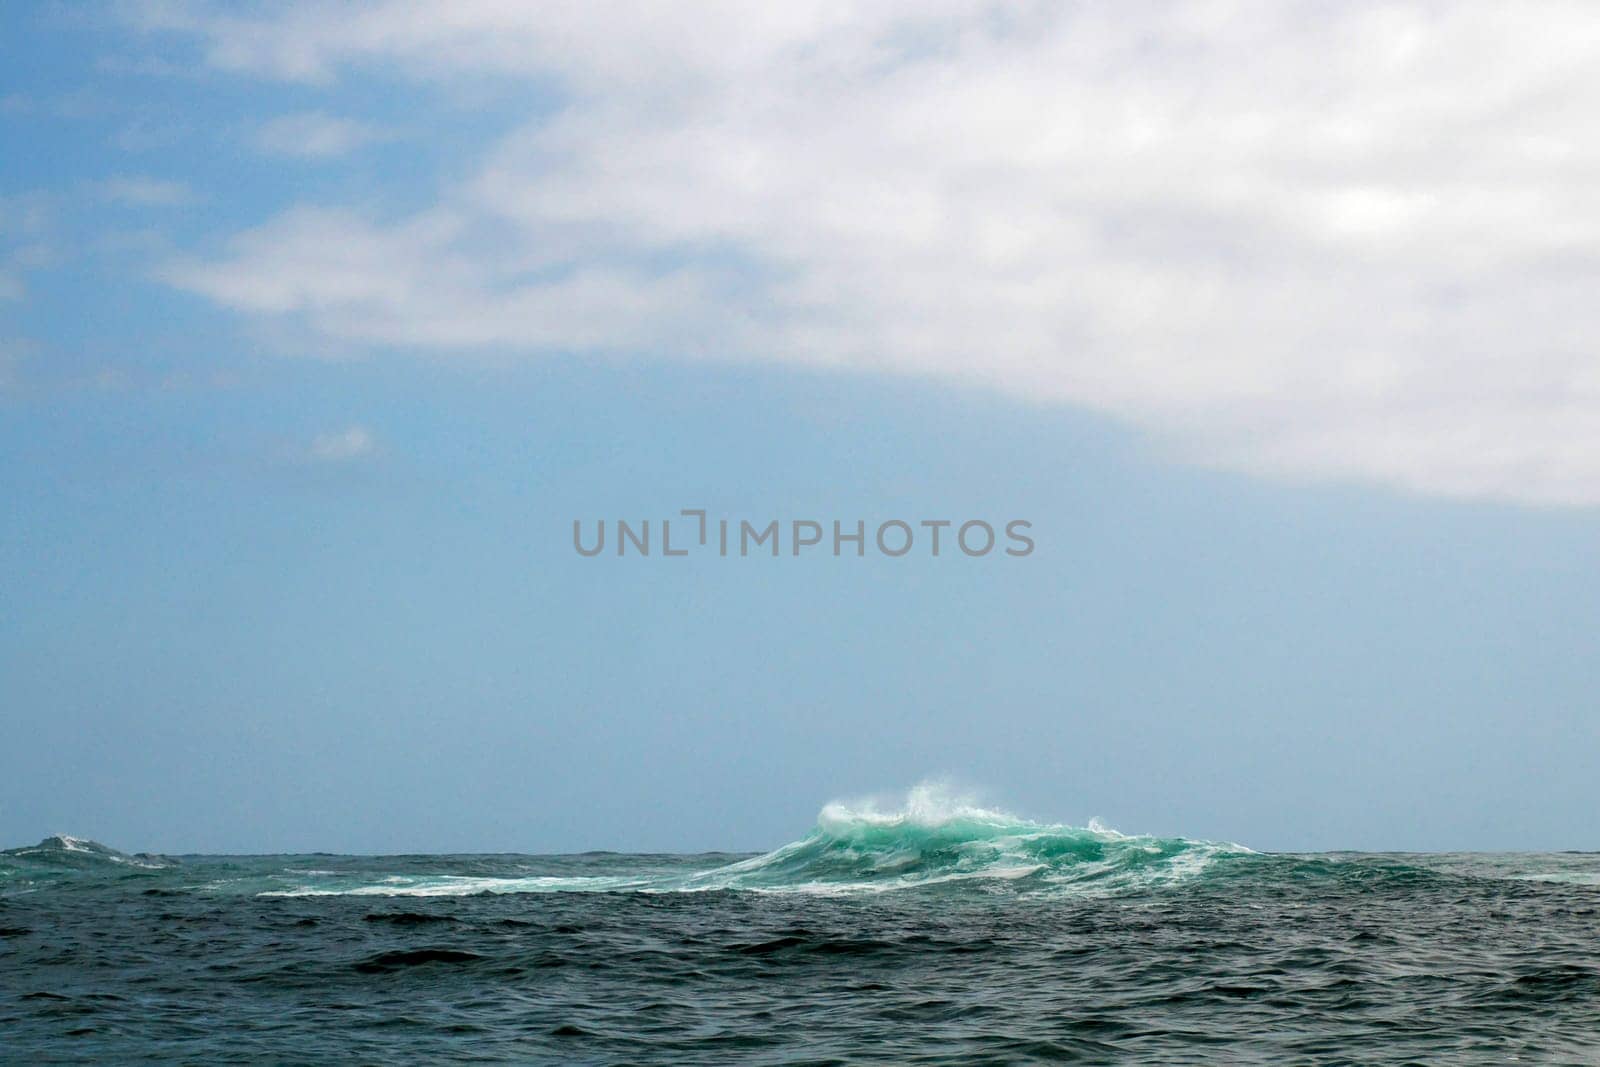 Big Pacific ocean waves entering Magdalena bay near Isla Santa Margarita baja california sur from boat